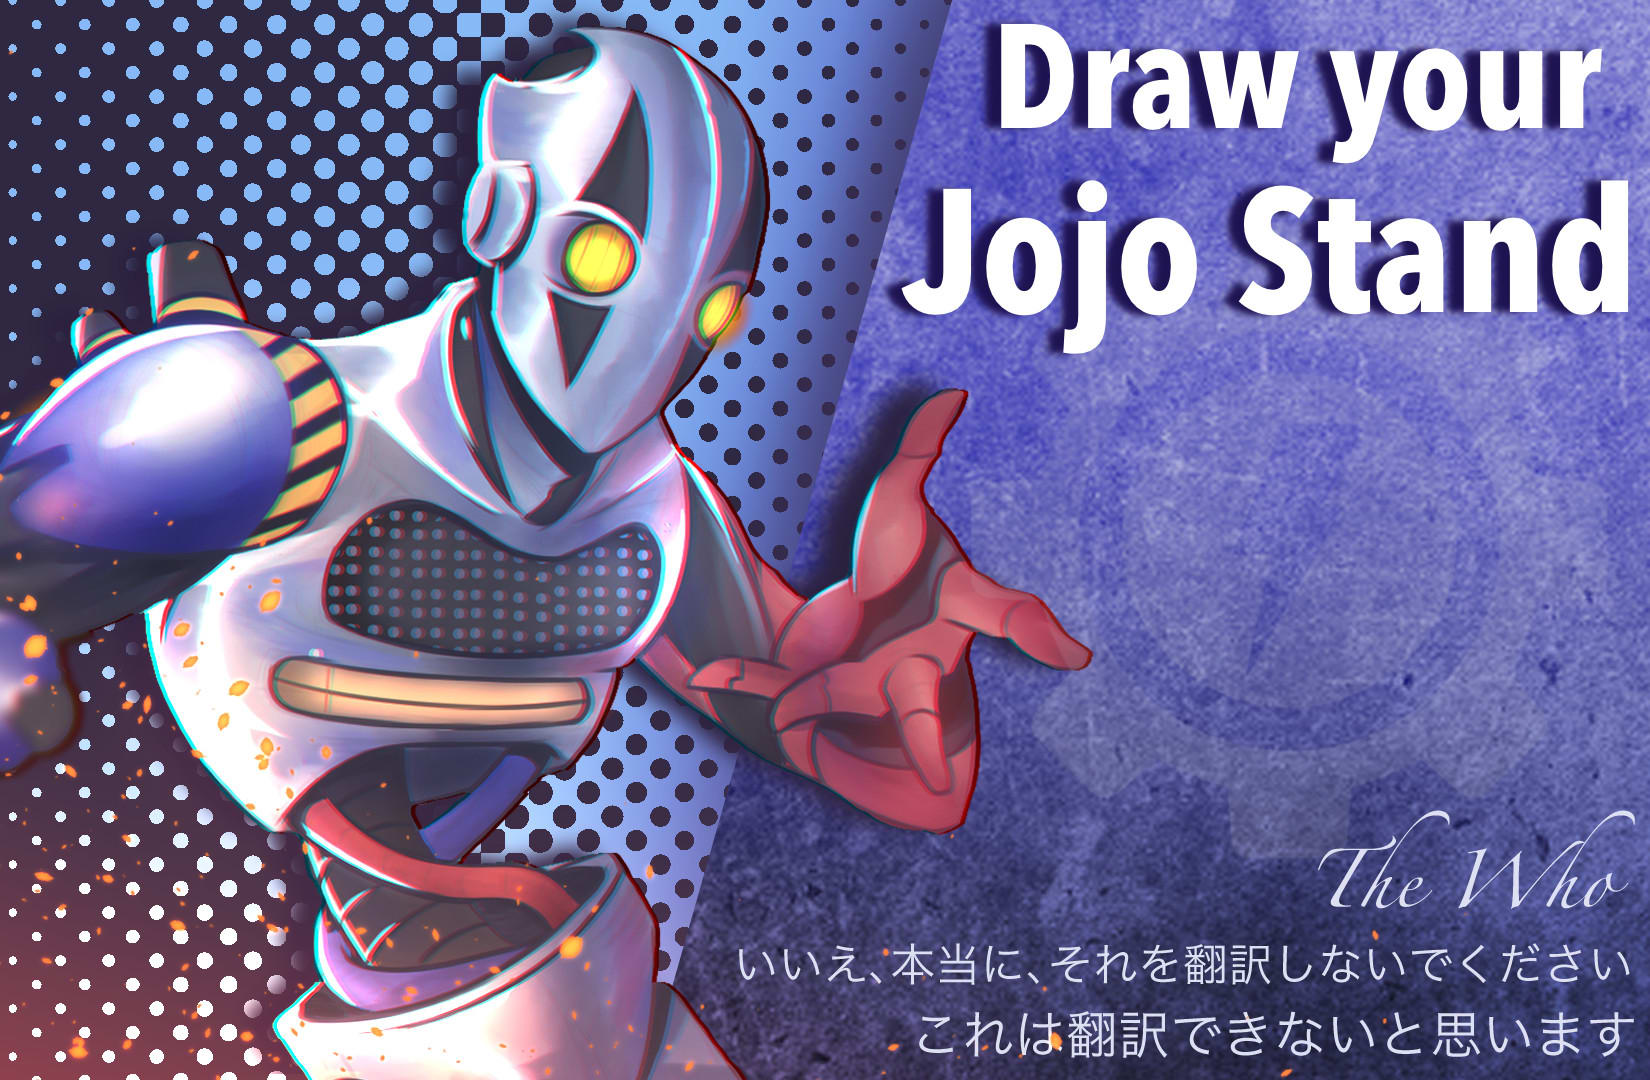 Custom Jojo Stand Drawing - Artists&Clients